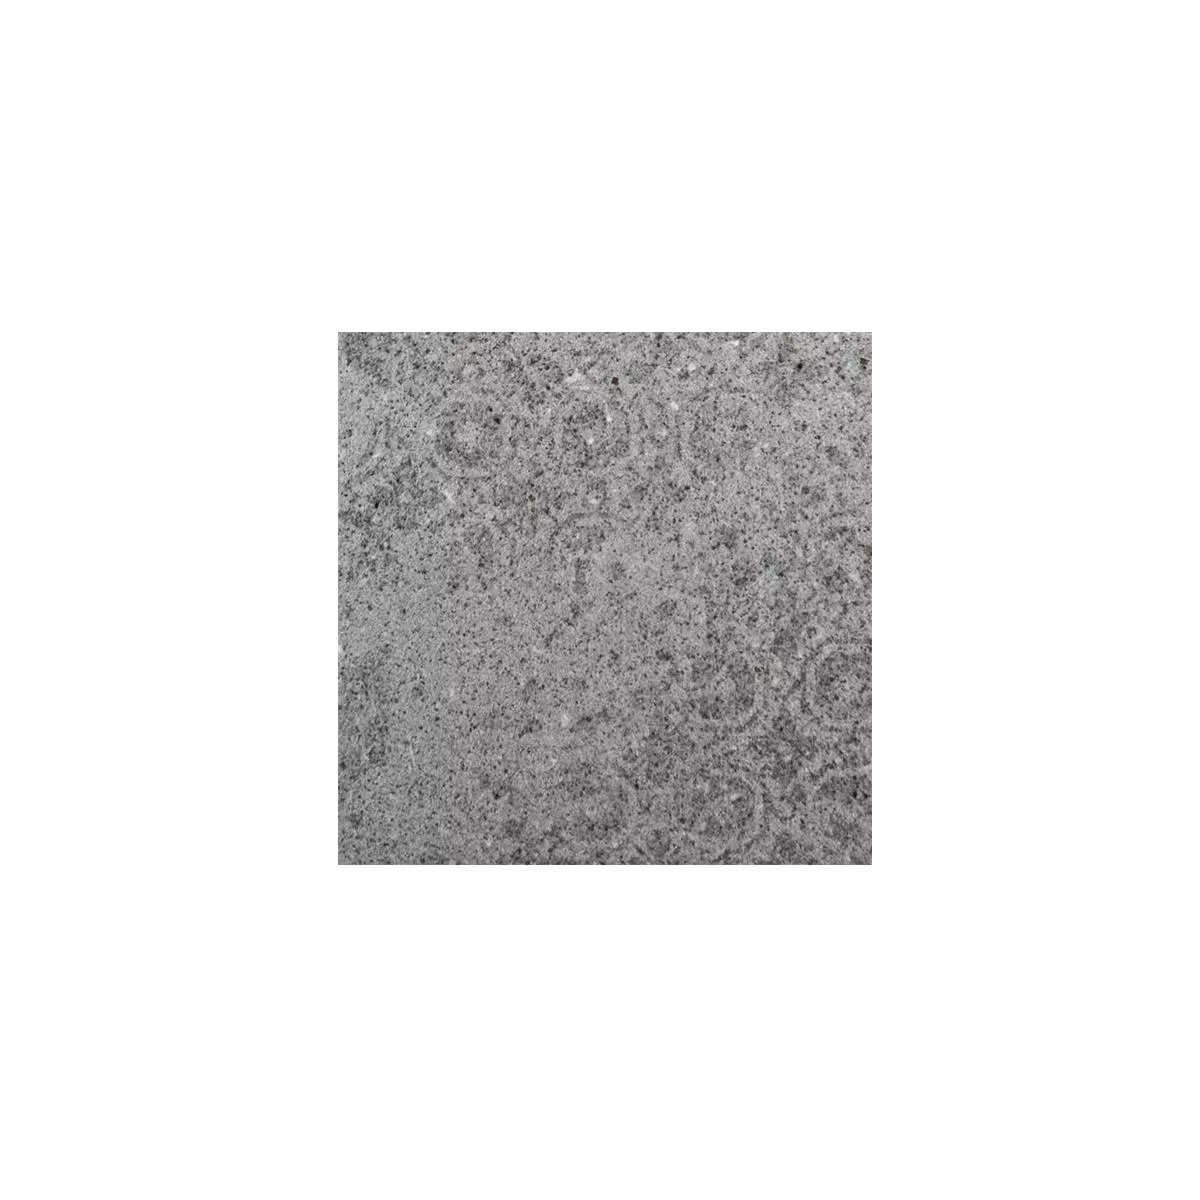 Muster von Keramikmosaik Fliesen Jeylo Retrooptik Grau Q95